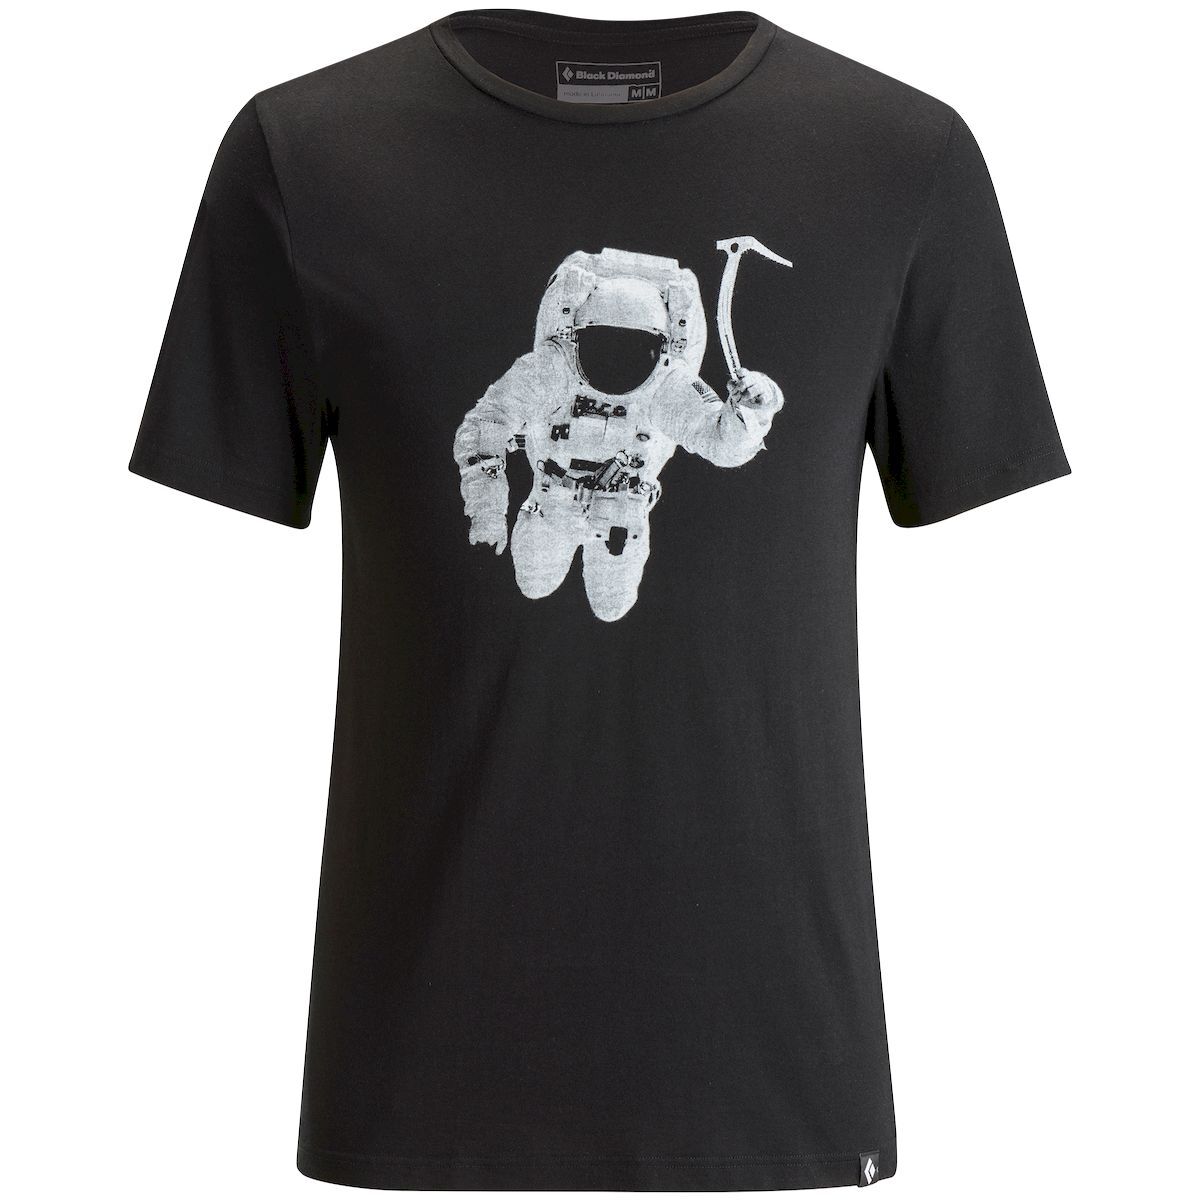 Black Diamond Ss Spaceshot Tee - T-shirt - Men's